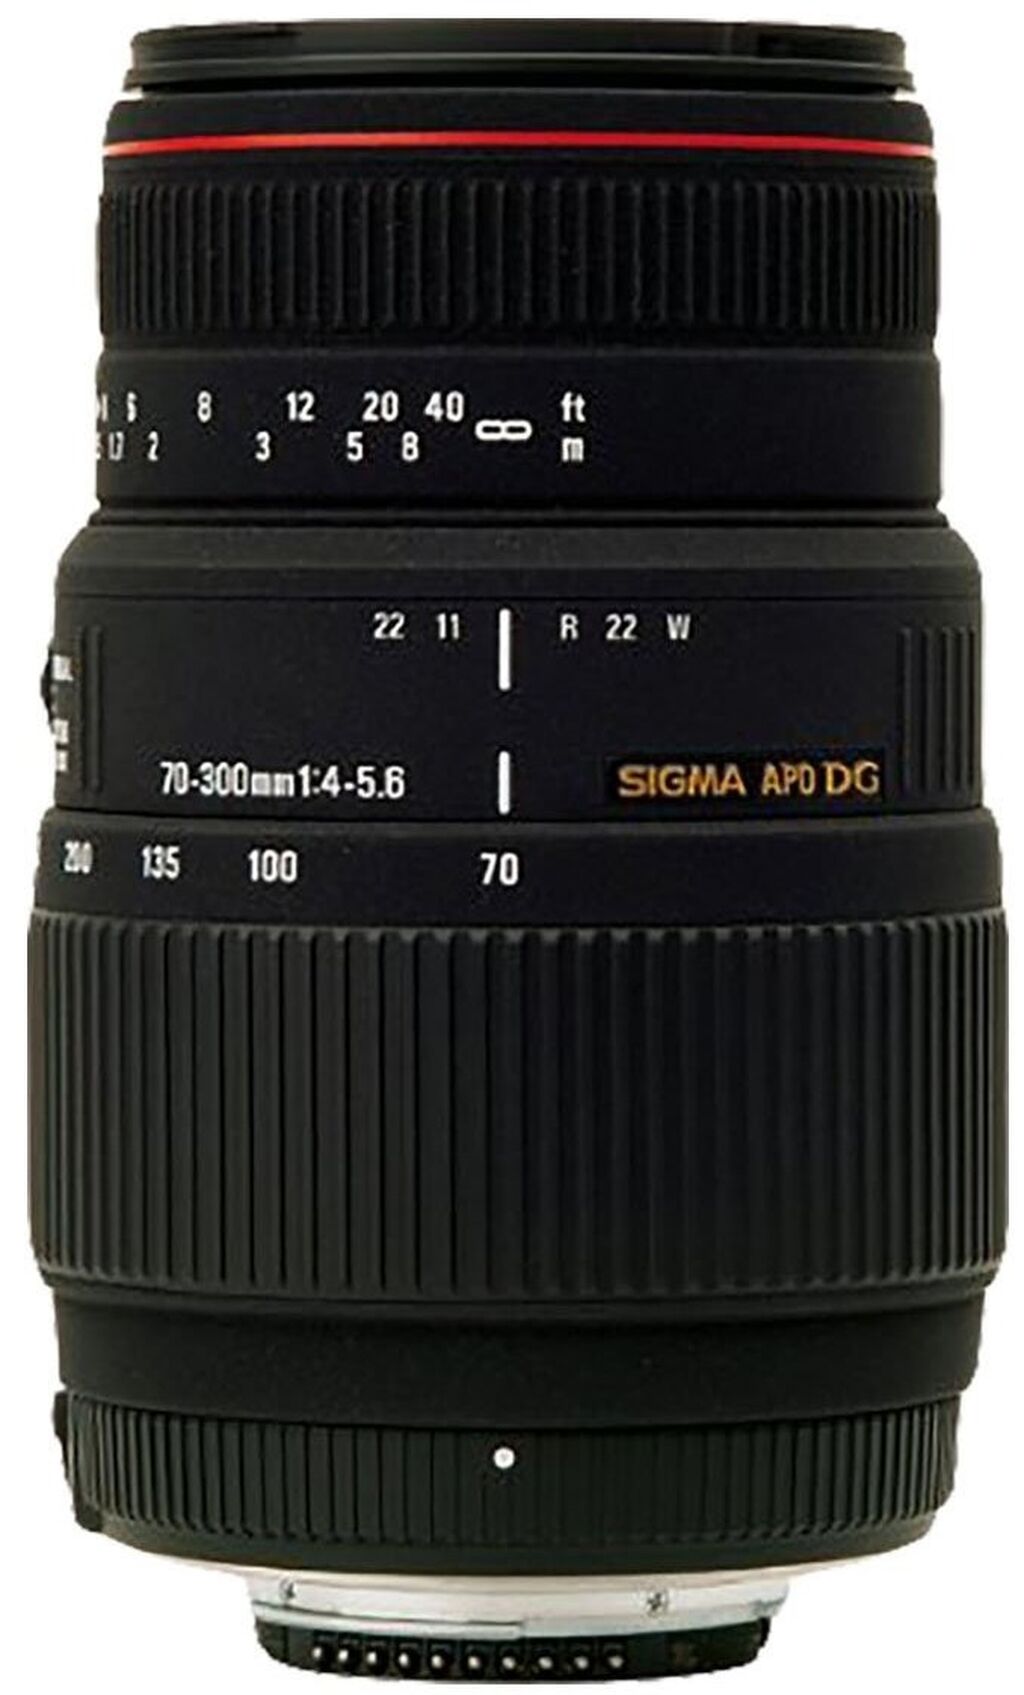 Sigma dg 300mm. Sigma 70-300 4-5.6 Nikon. Sigma 70-300mm d 1:4-5.6 apo DG. Sigma af 70-300mm f/4-5.6 apo macro DG Nikon f. 70-300 DG macro 4-5.6 apo Sigma.